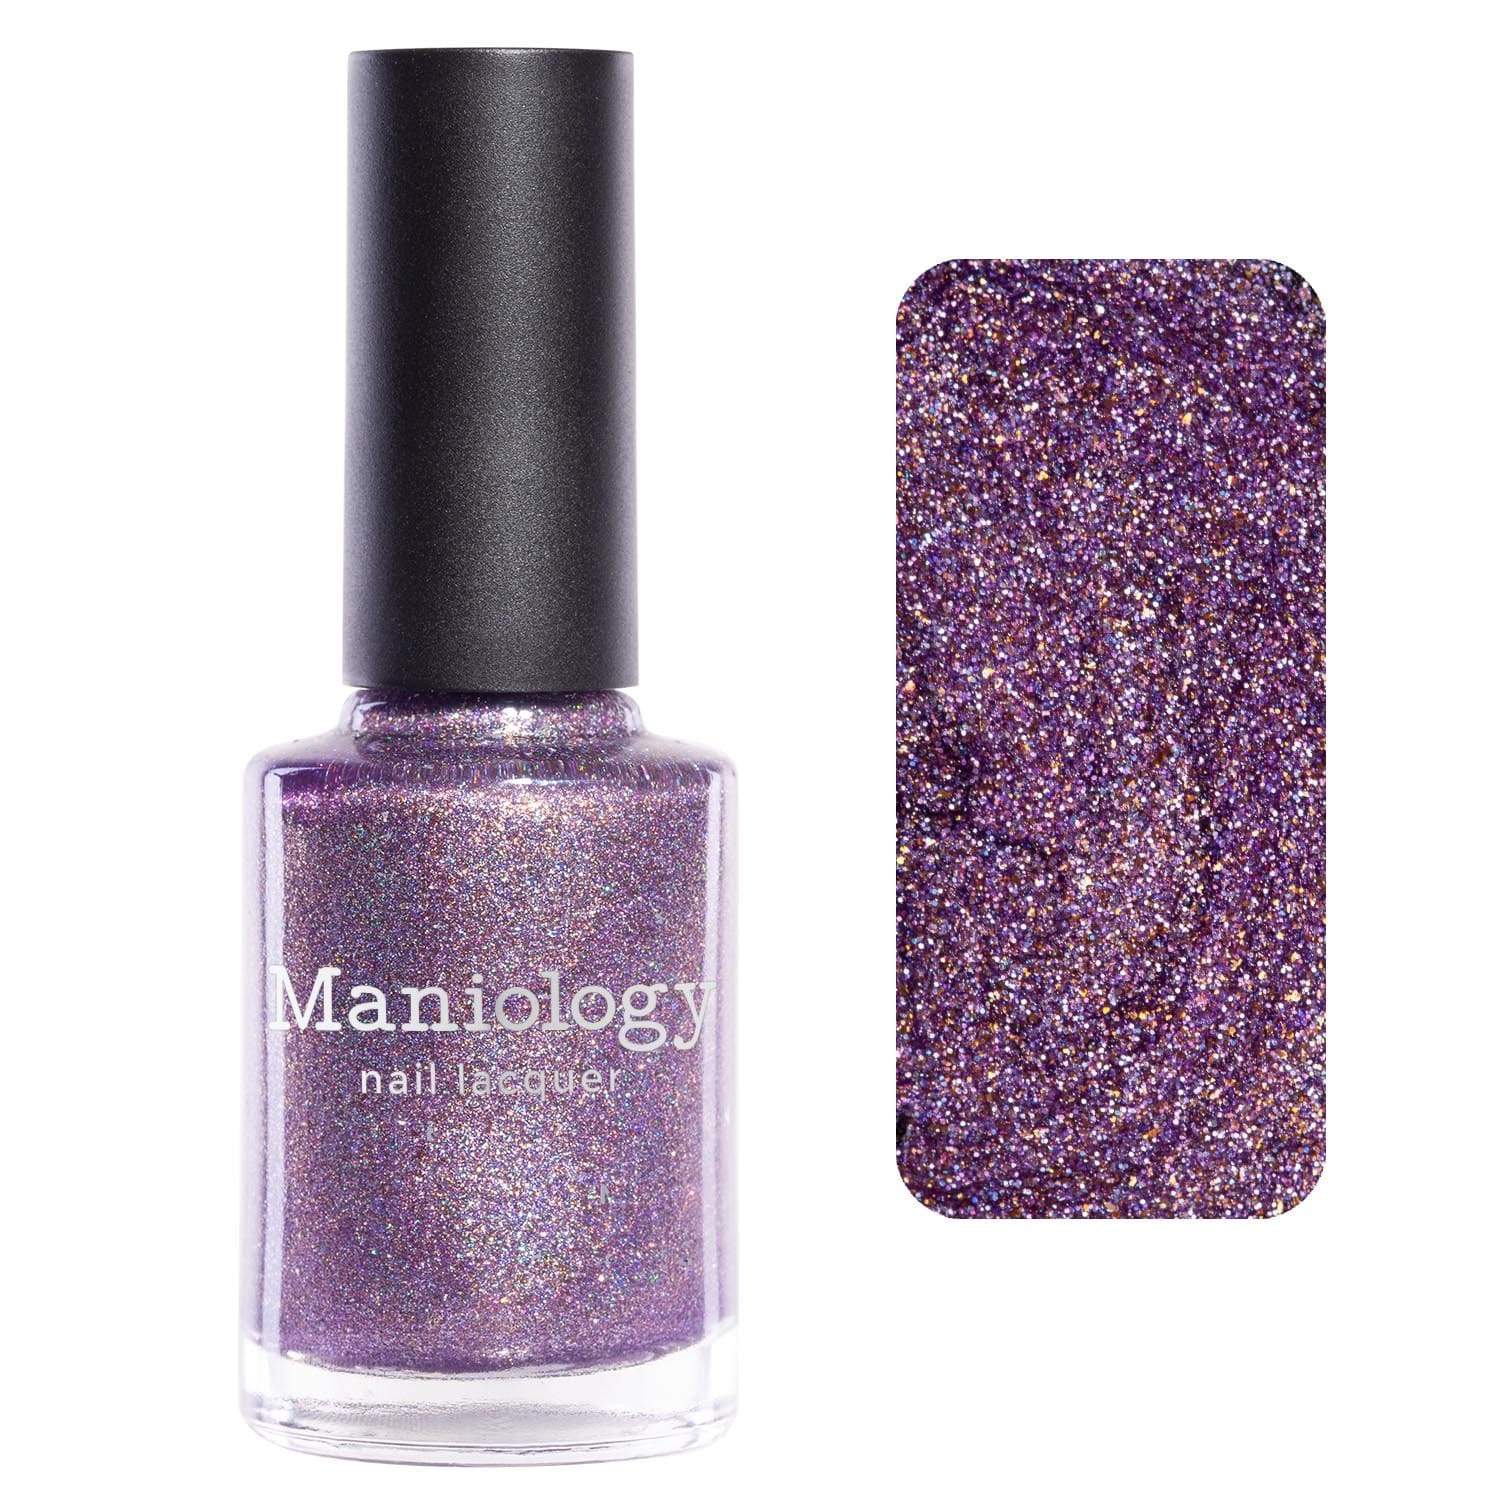 Shop Cirque Holographic Purple Shimmer Nail Polish | I Love My Polish